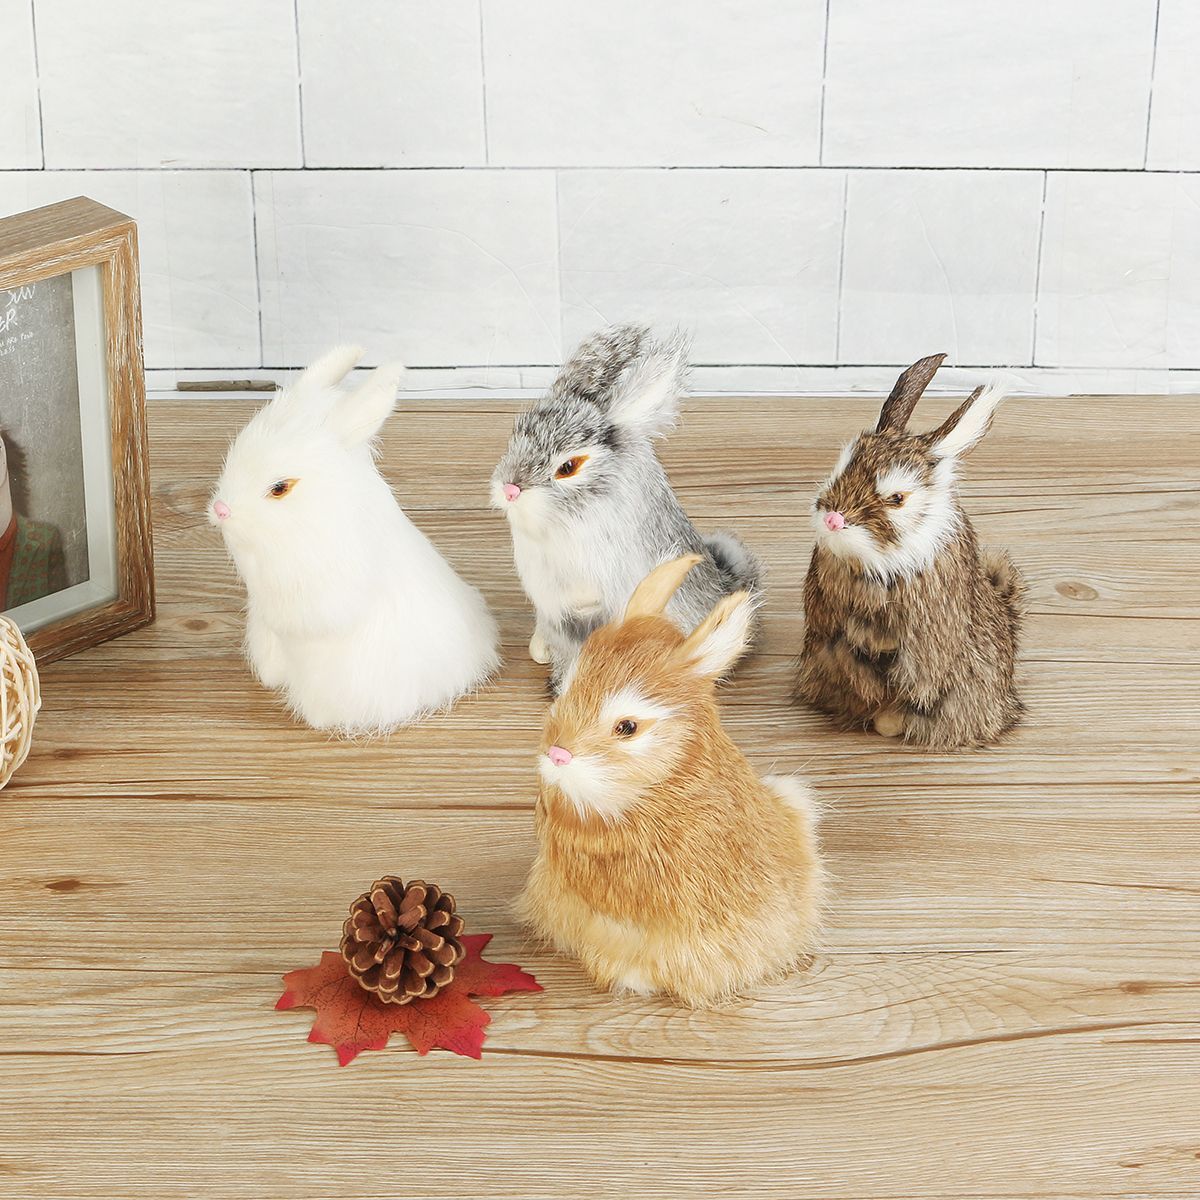 GrayYellowBrownWhite-Rabbits-Handmade-Easter-Bunnies-Home-Decorations-Desktop-Ornament-1452976